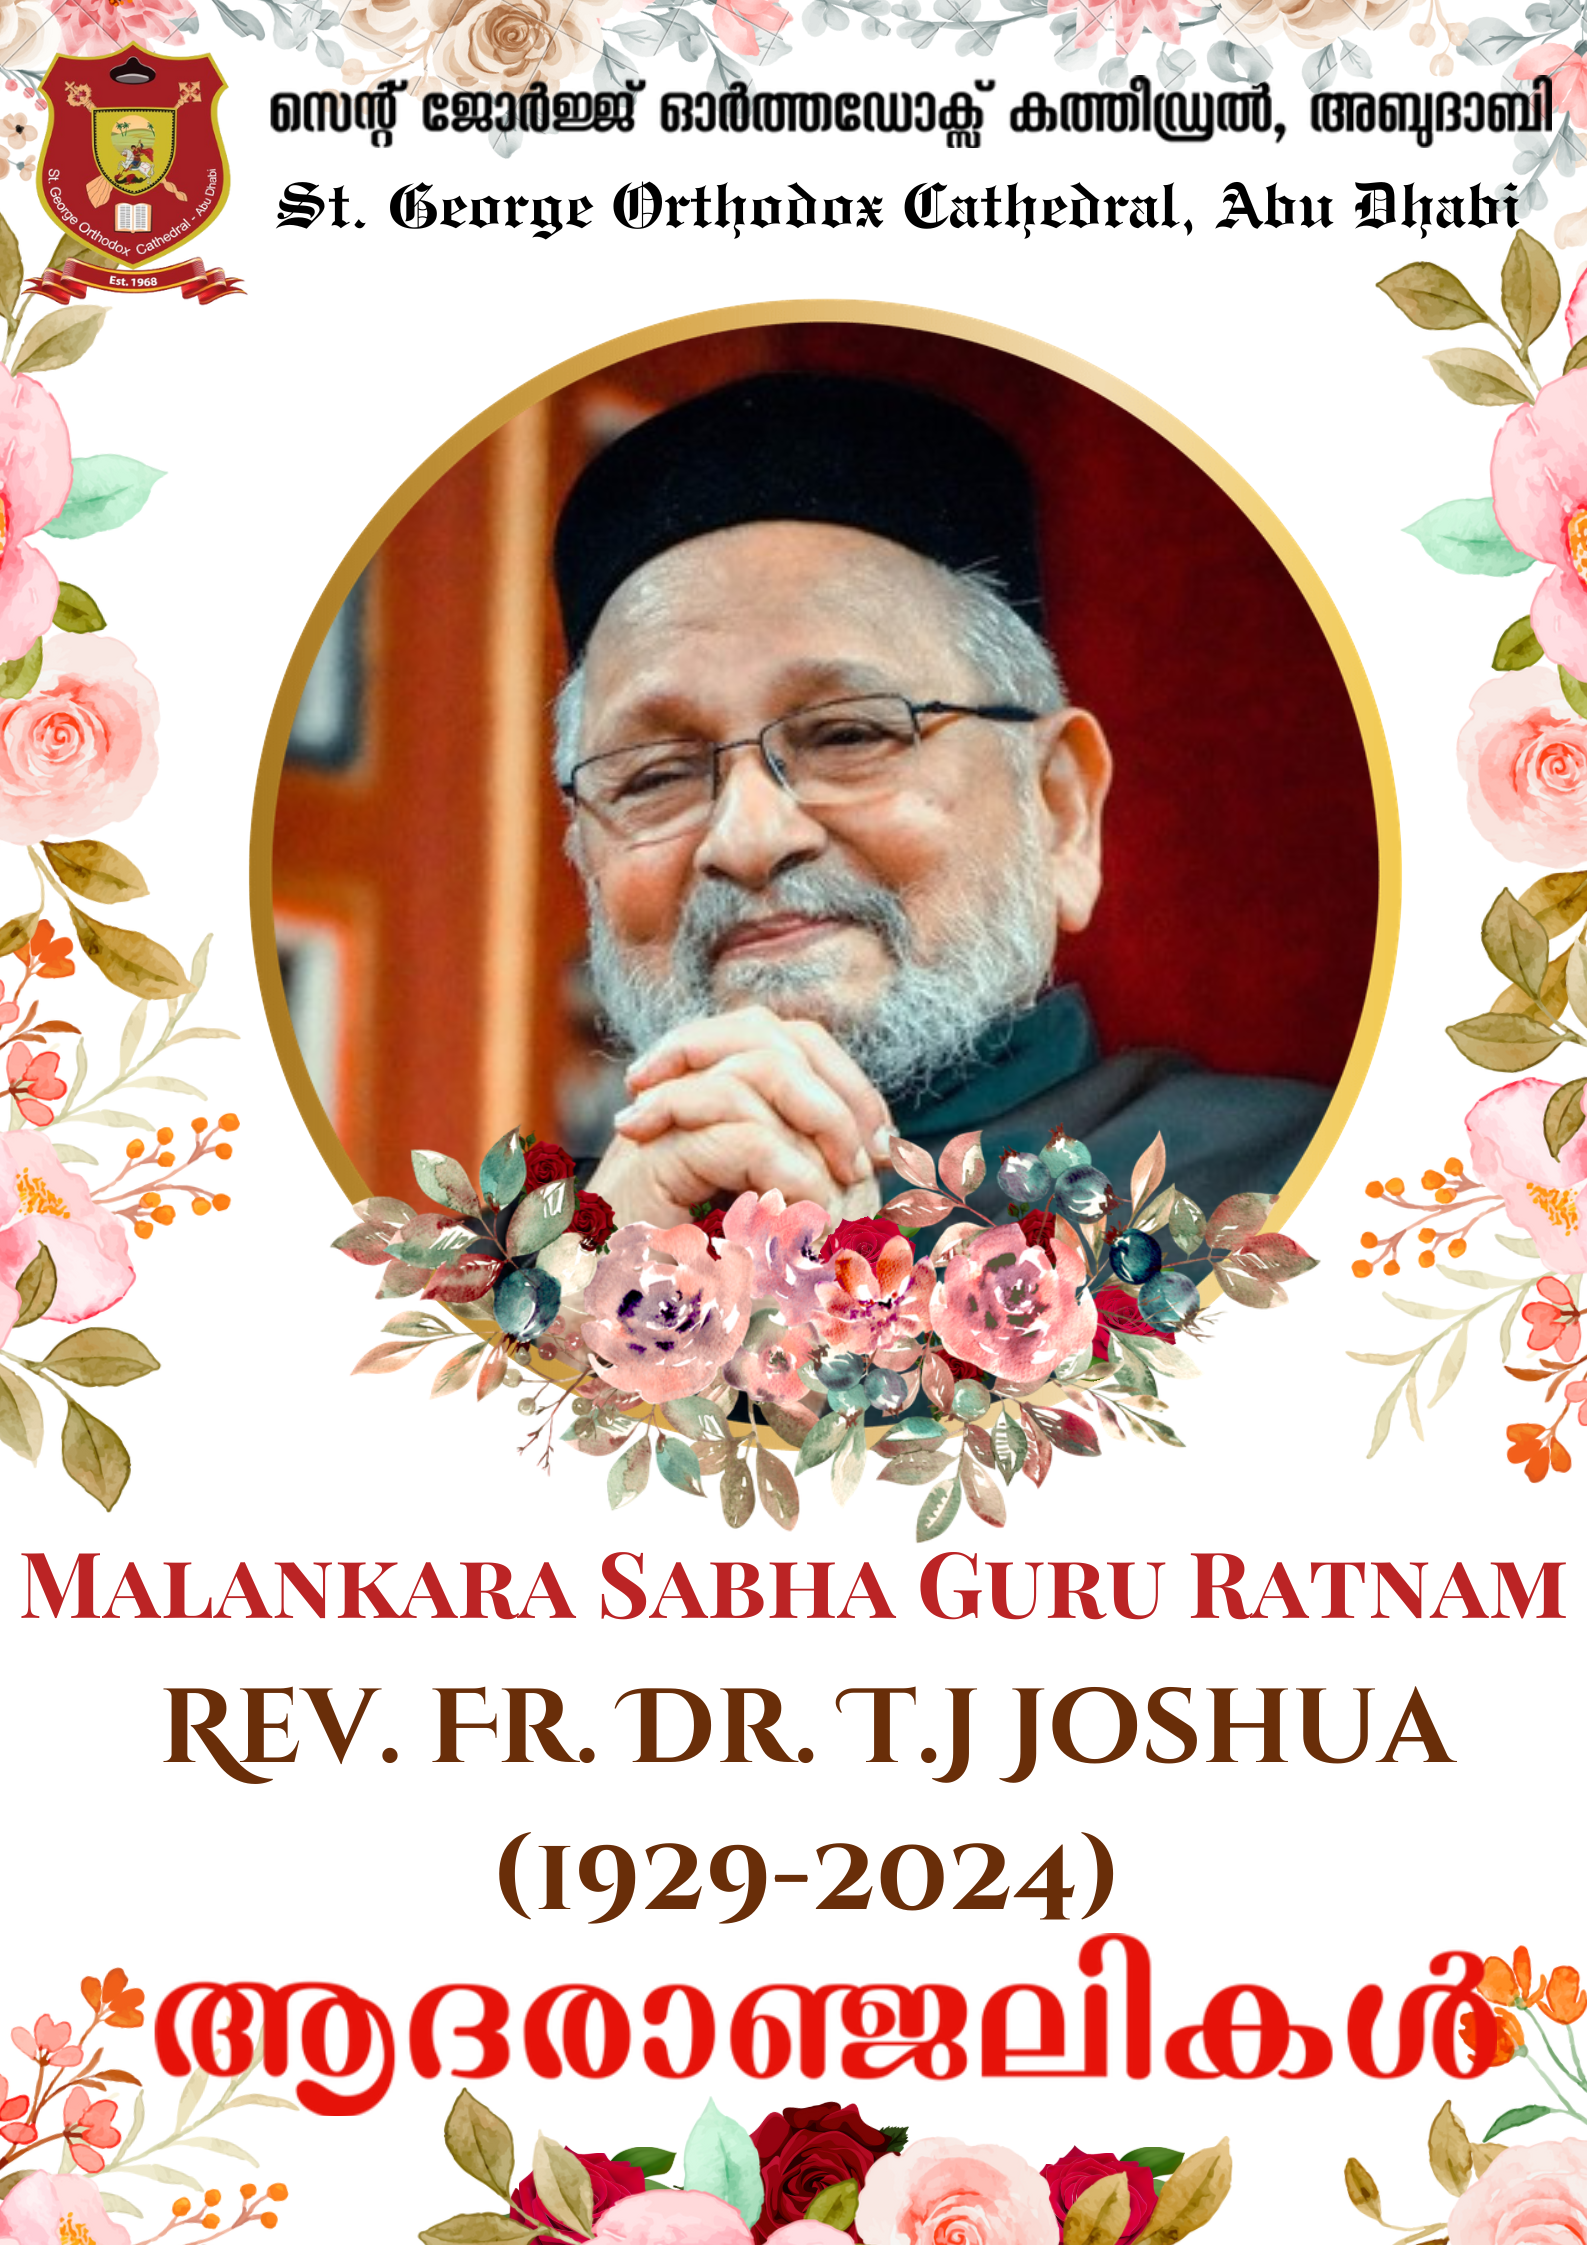 Deepest Condolences on the sad demise of Rev. Fr. Dr T.J. Joshua, The Guru Ratnam of the Malankara Orthodox Sabha